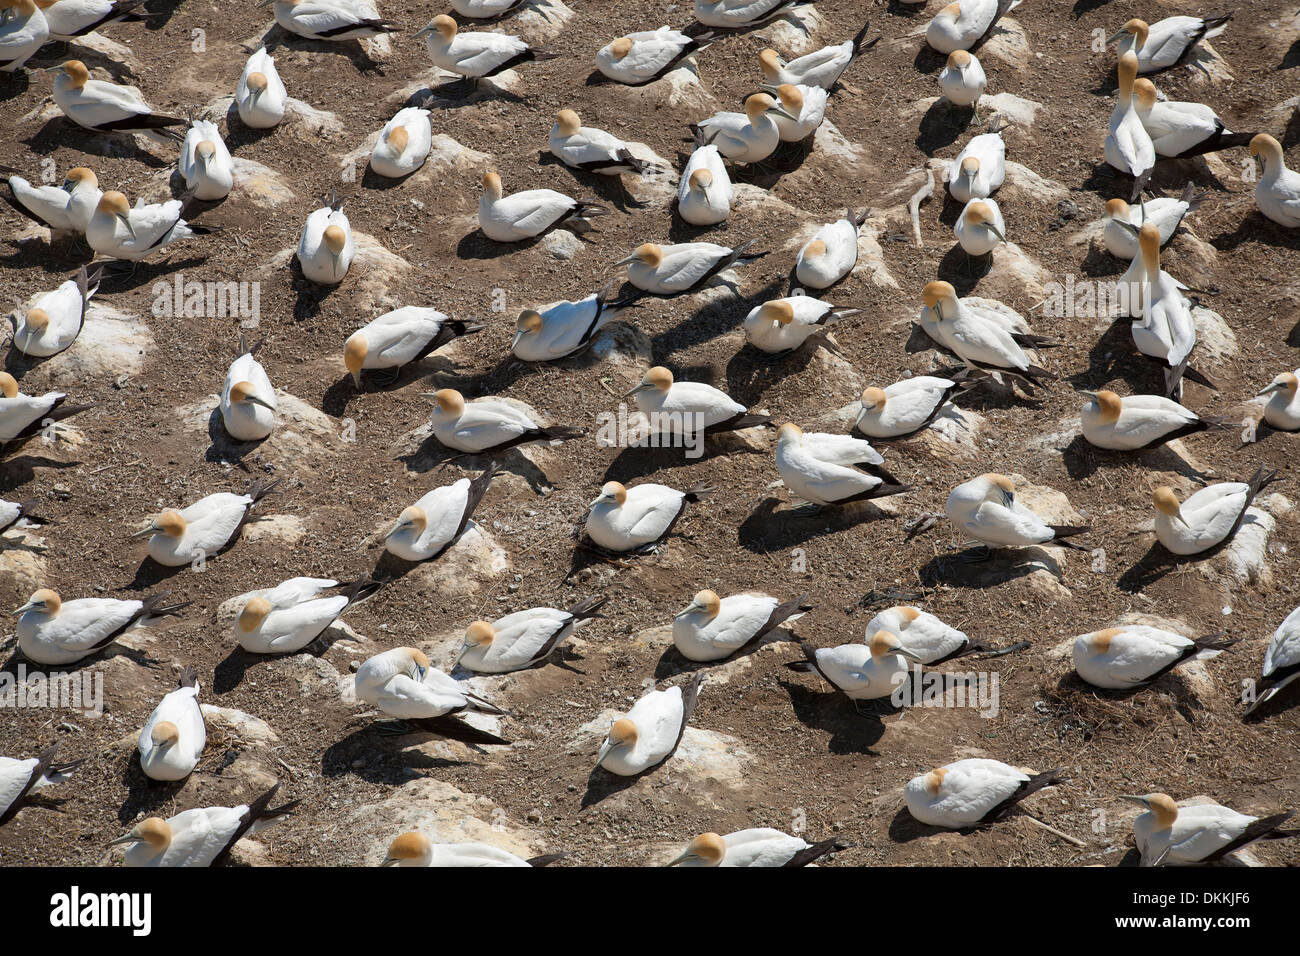 The gannet colony at Muriwai Beach, New Zealand Stock Photo